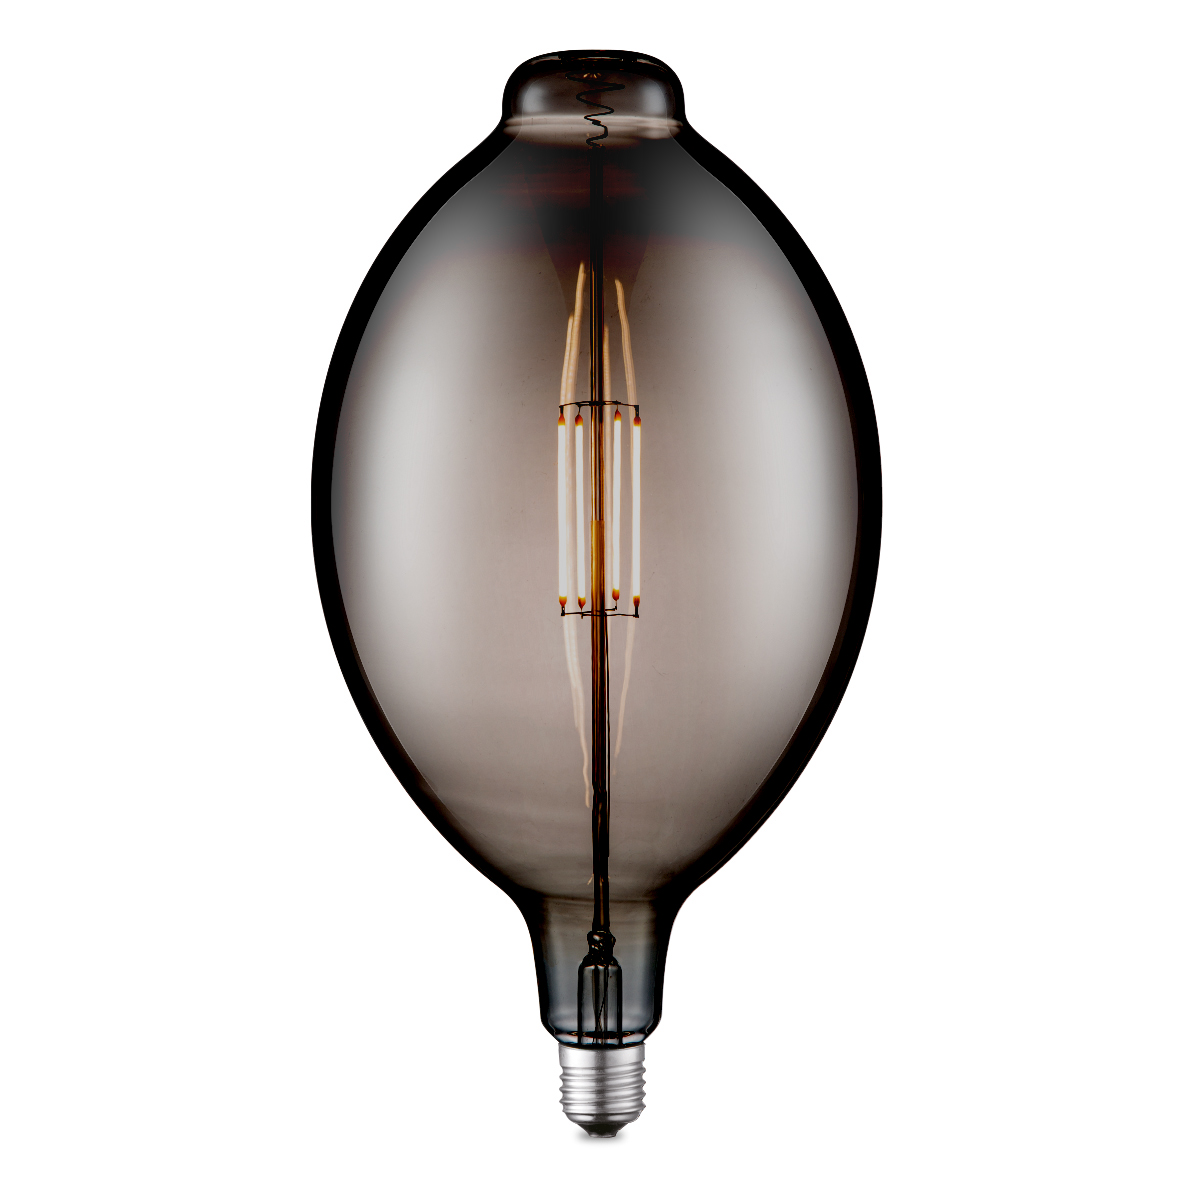 Tangla lighting - TLB-8041-04TM - LED Light Bulb Deco filament - special 4W titanium - conch - dimmable - E27